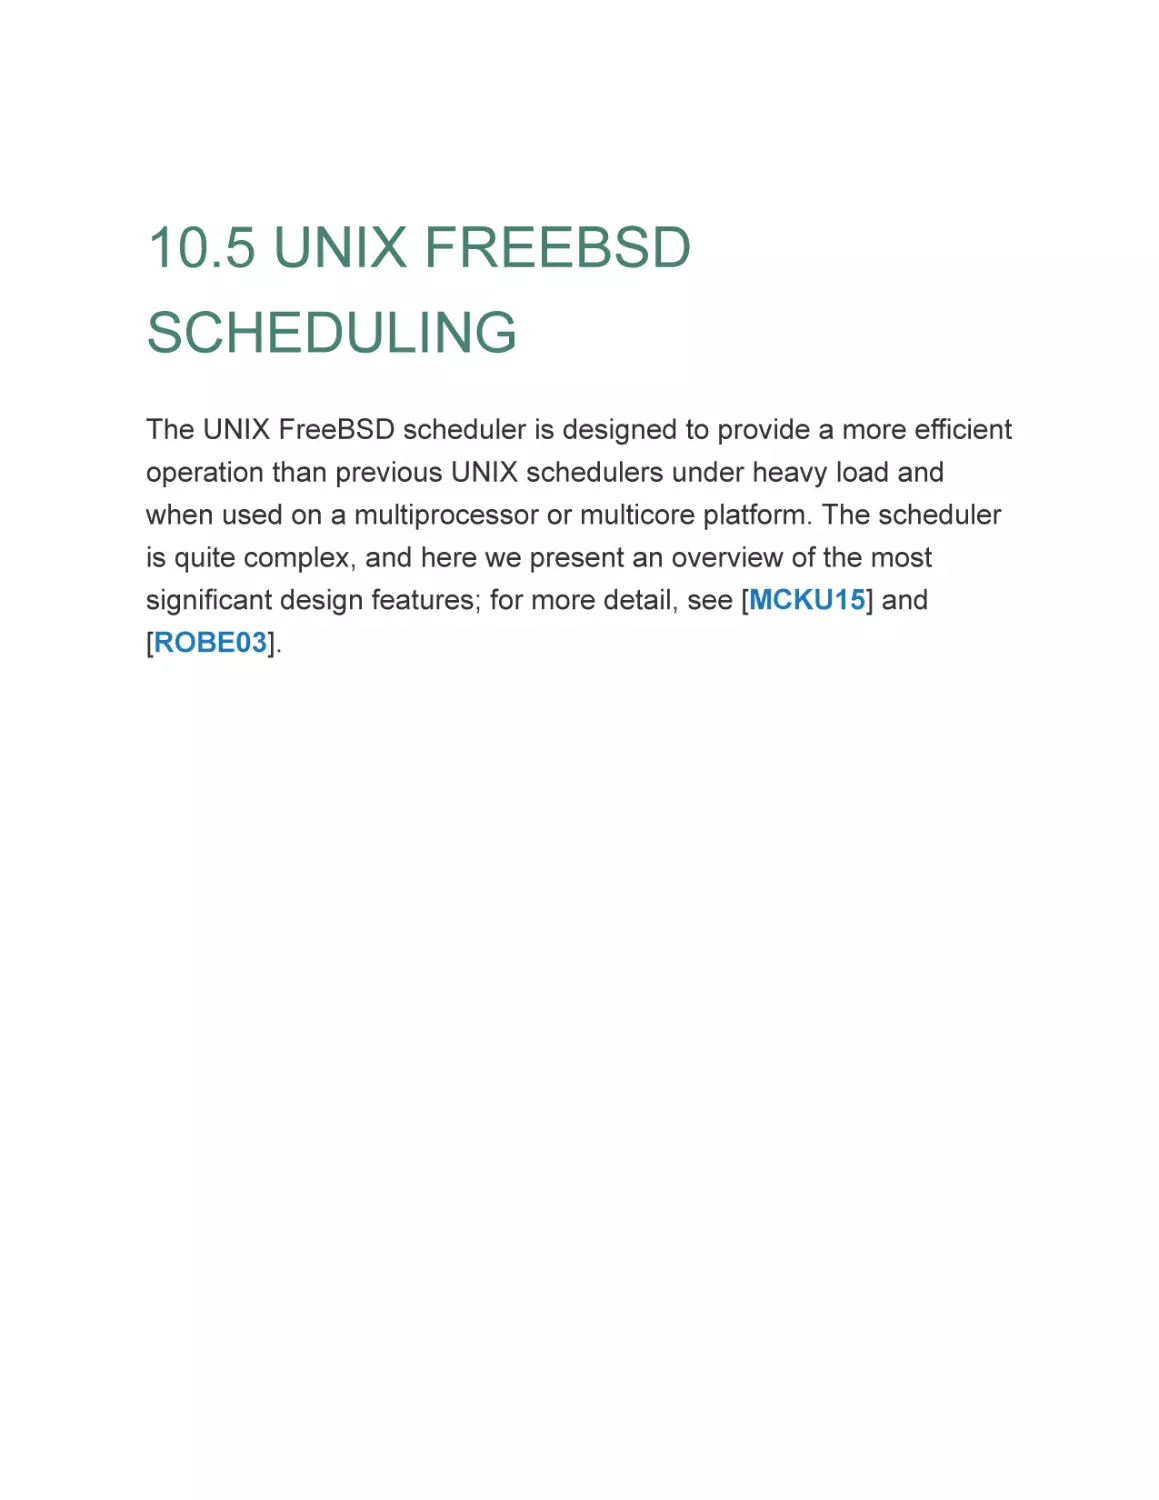 10.5 UNIX FREEBSD SCHEDULING